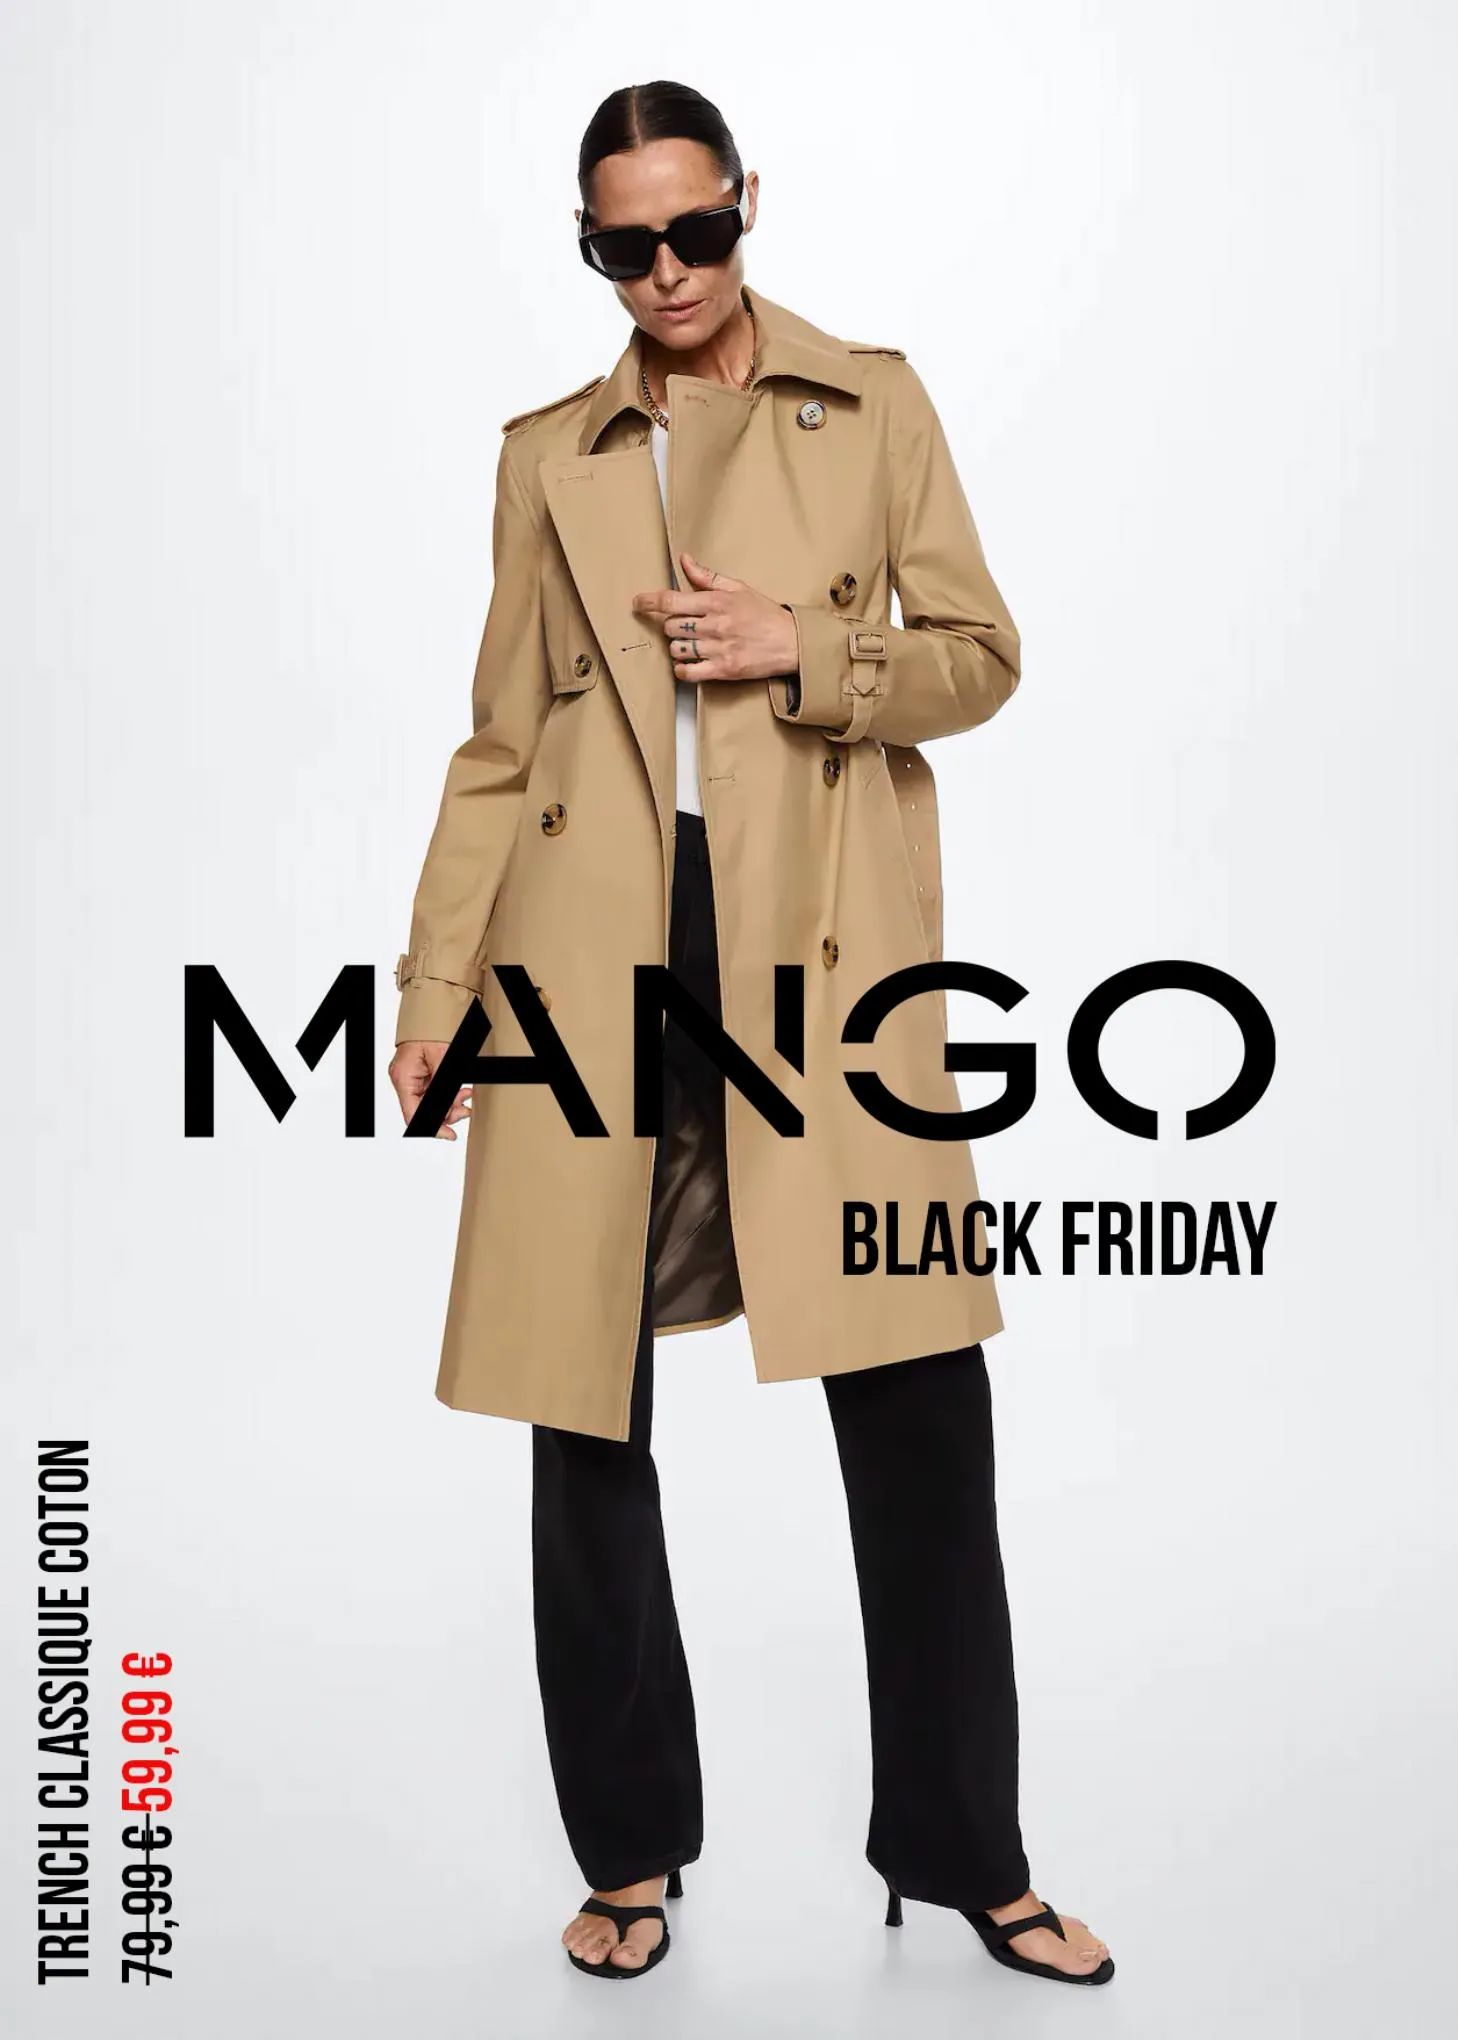 Catalogue Offres Mango Black Friday, page 00001